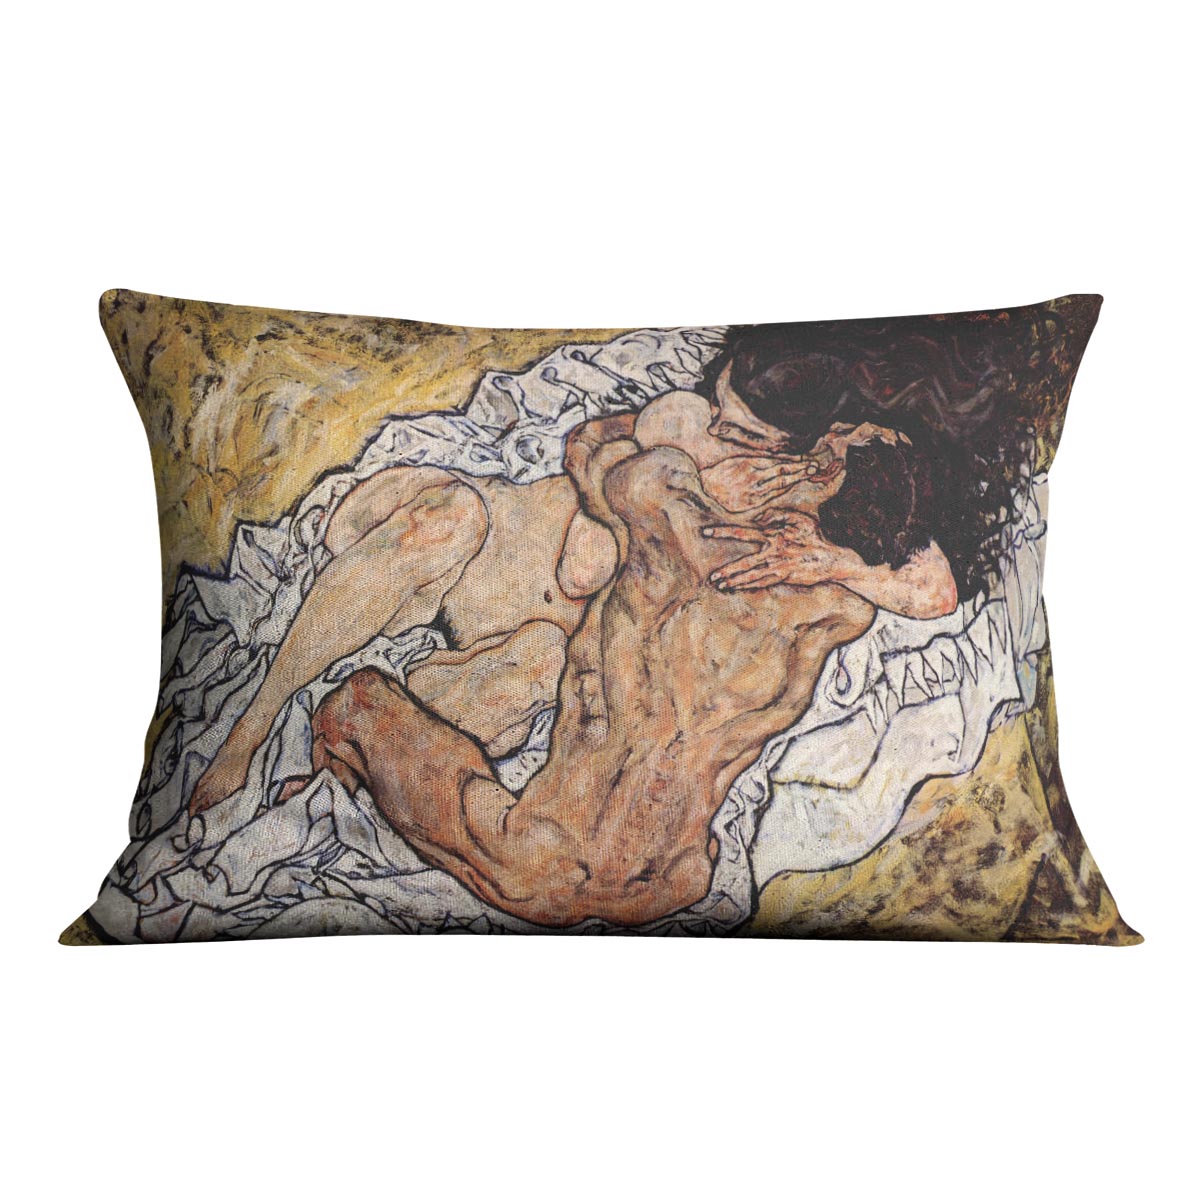 The Embrace by Egon Schiele Cushion